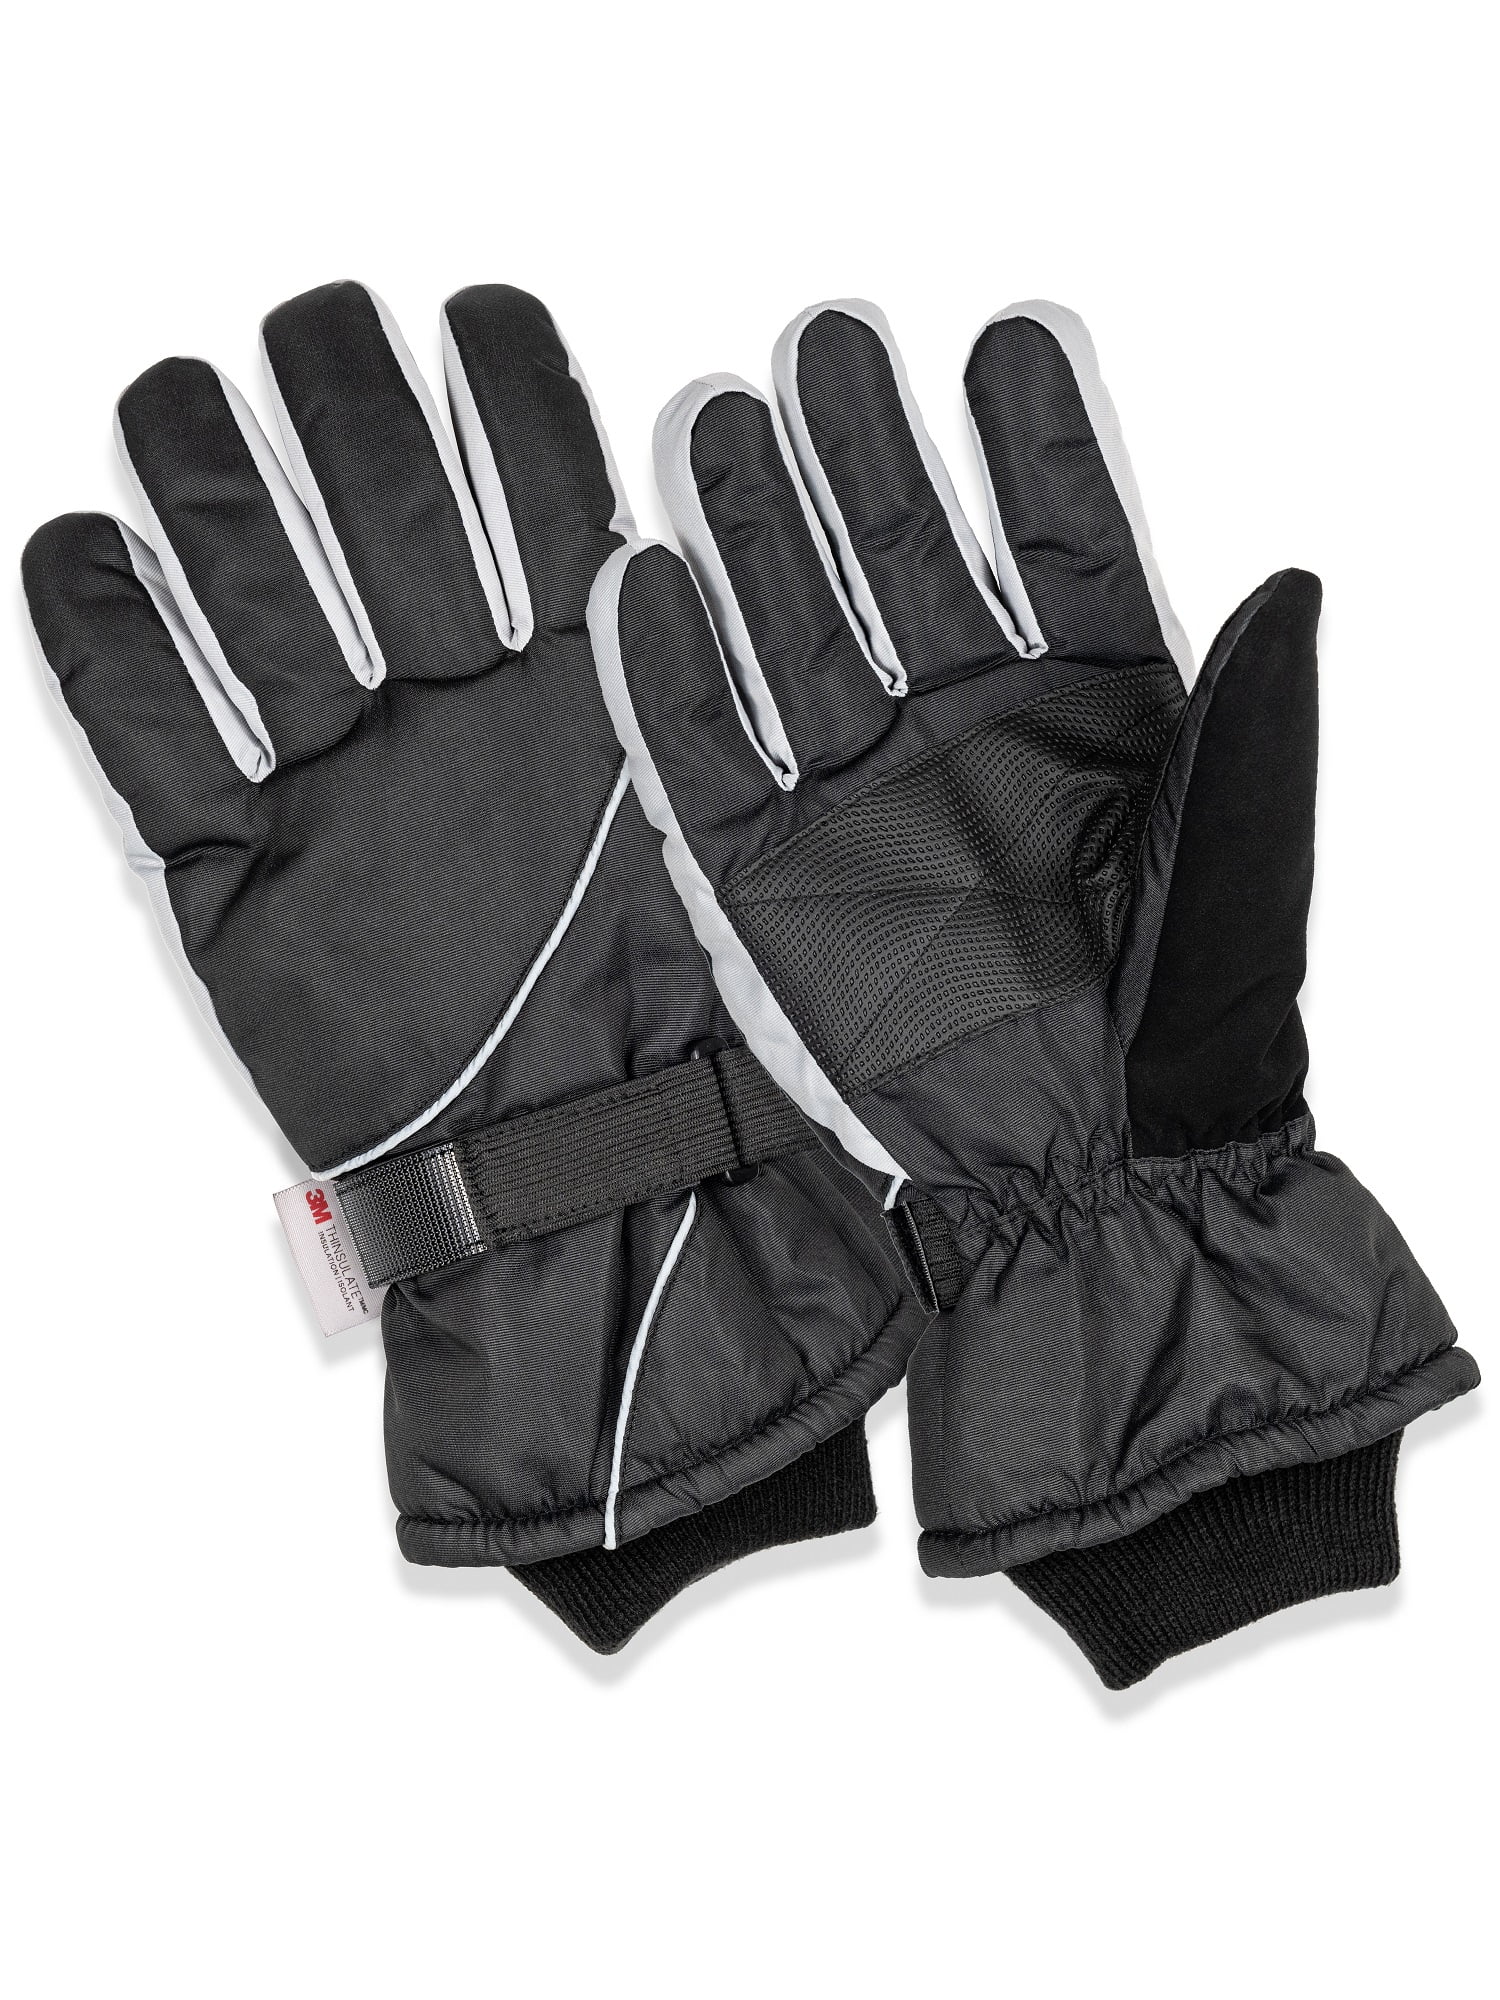 Gloves Men's XL Rugged Wear Ski Winter Snow Waterproof Insert Extra Large Blue 